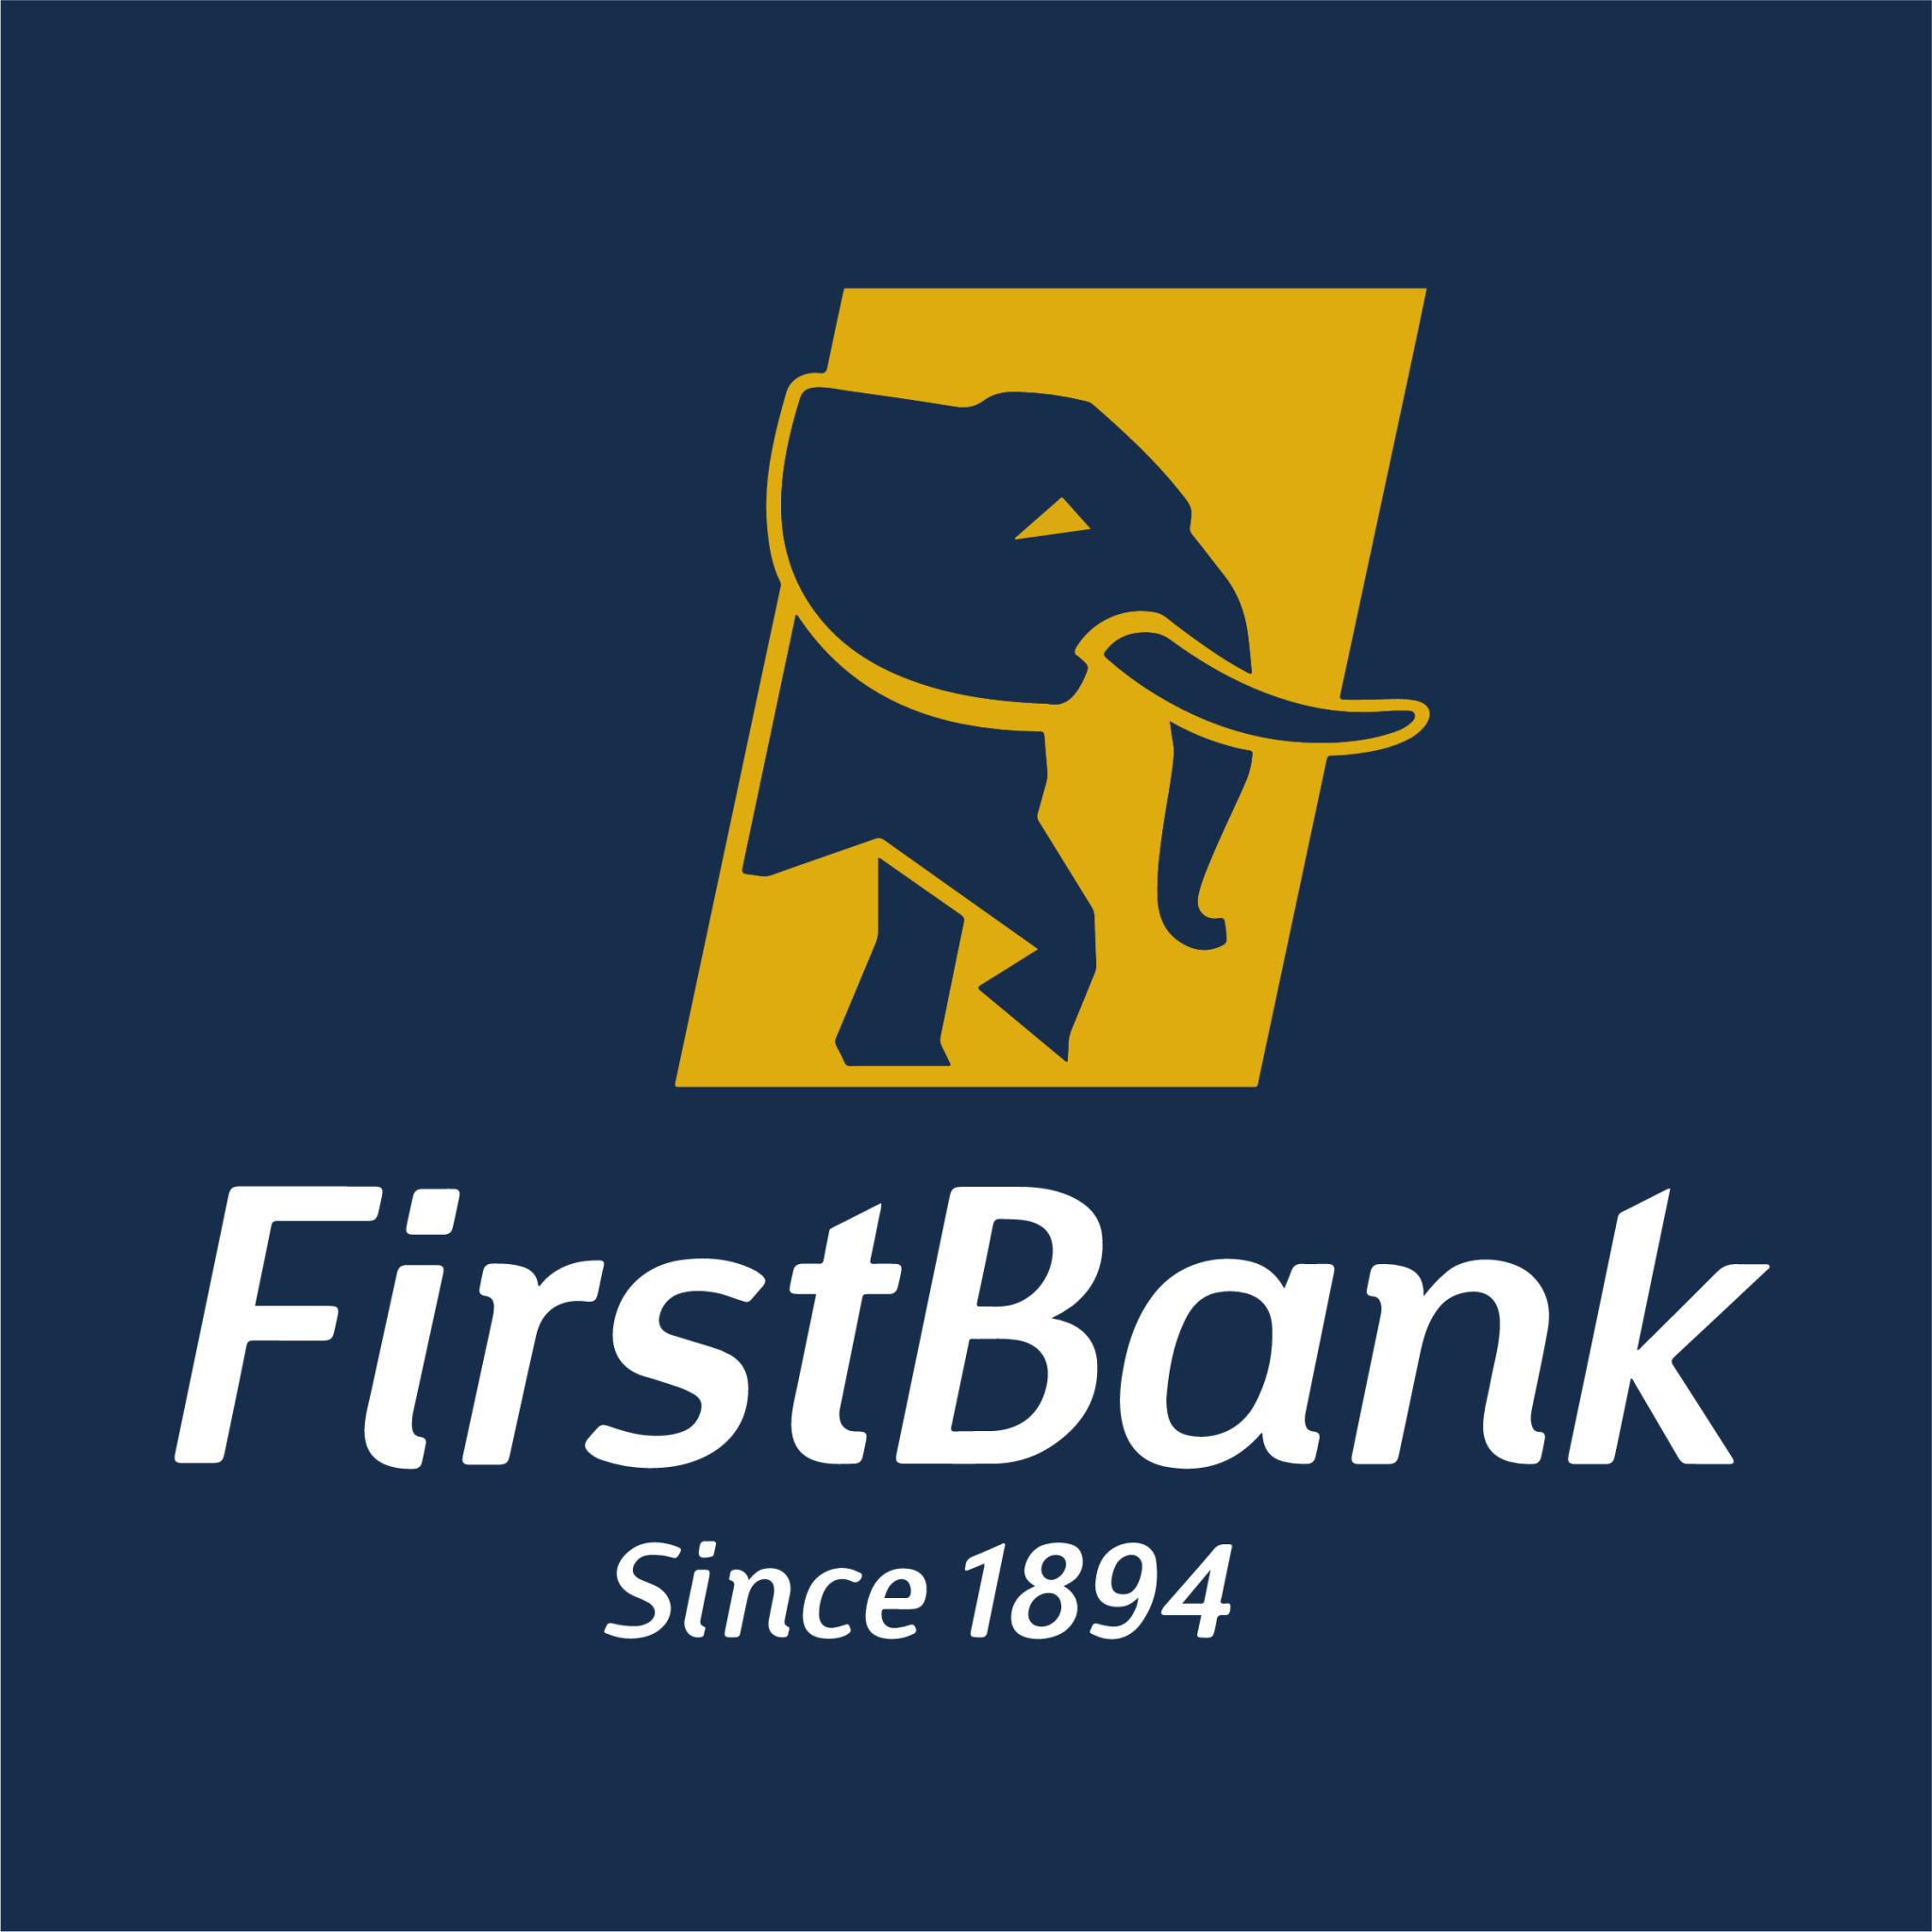 1 first bank. First Bank. Банк since. Банк Нигерии. BUSHRIDERS Nigeria logo.